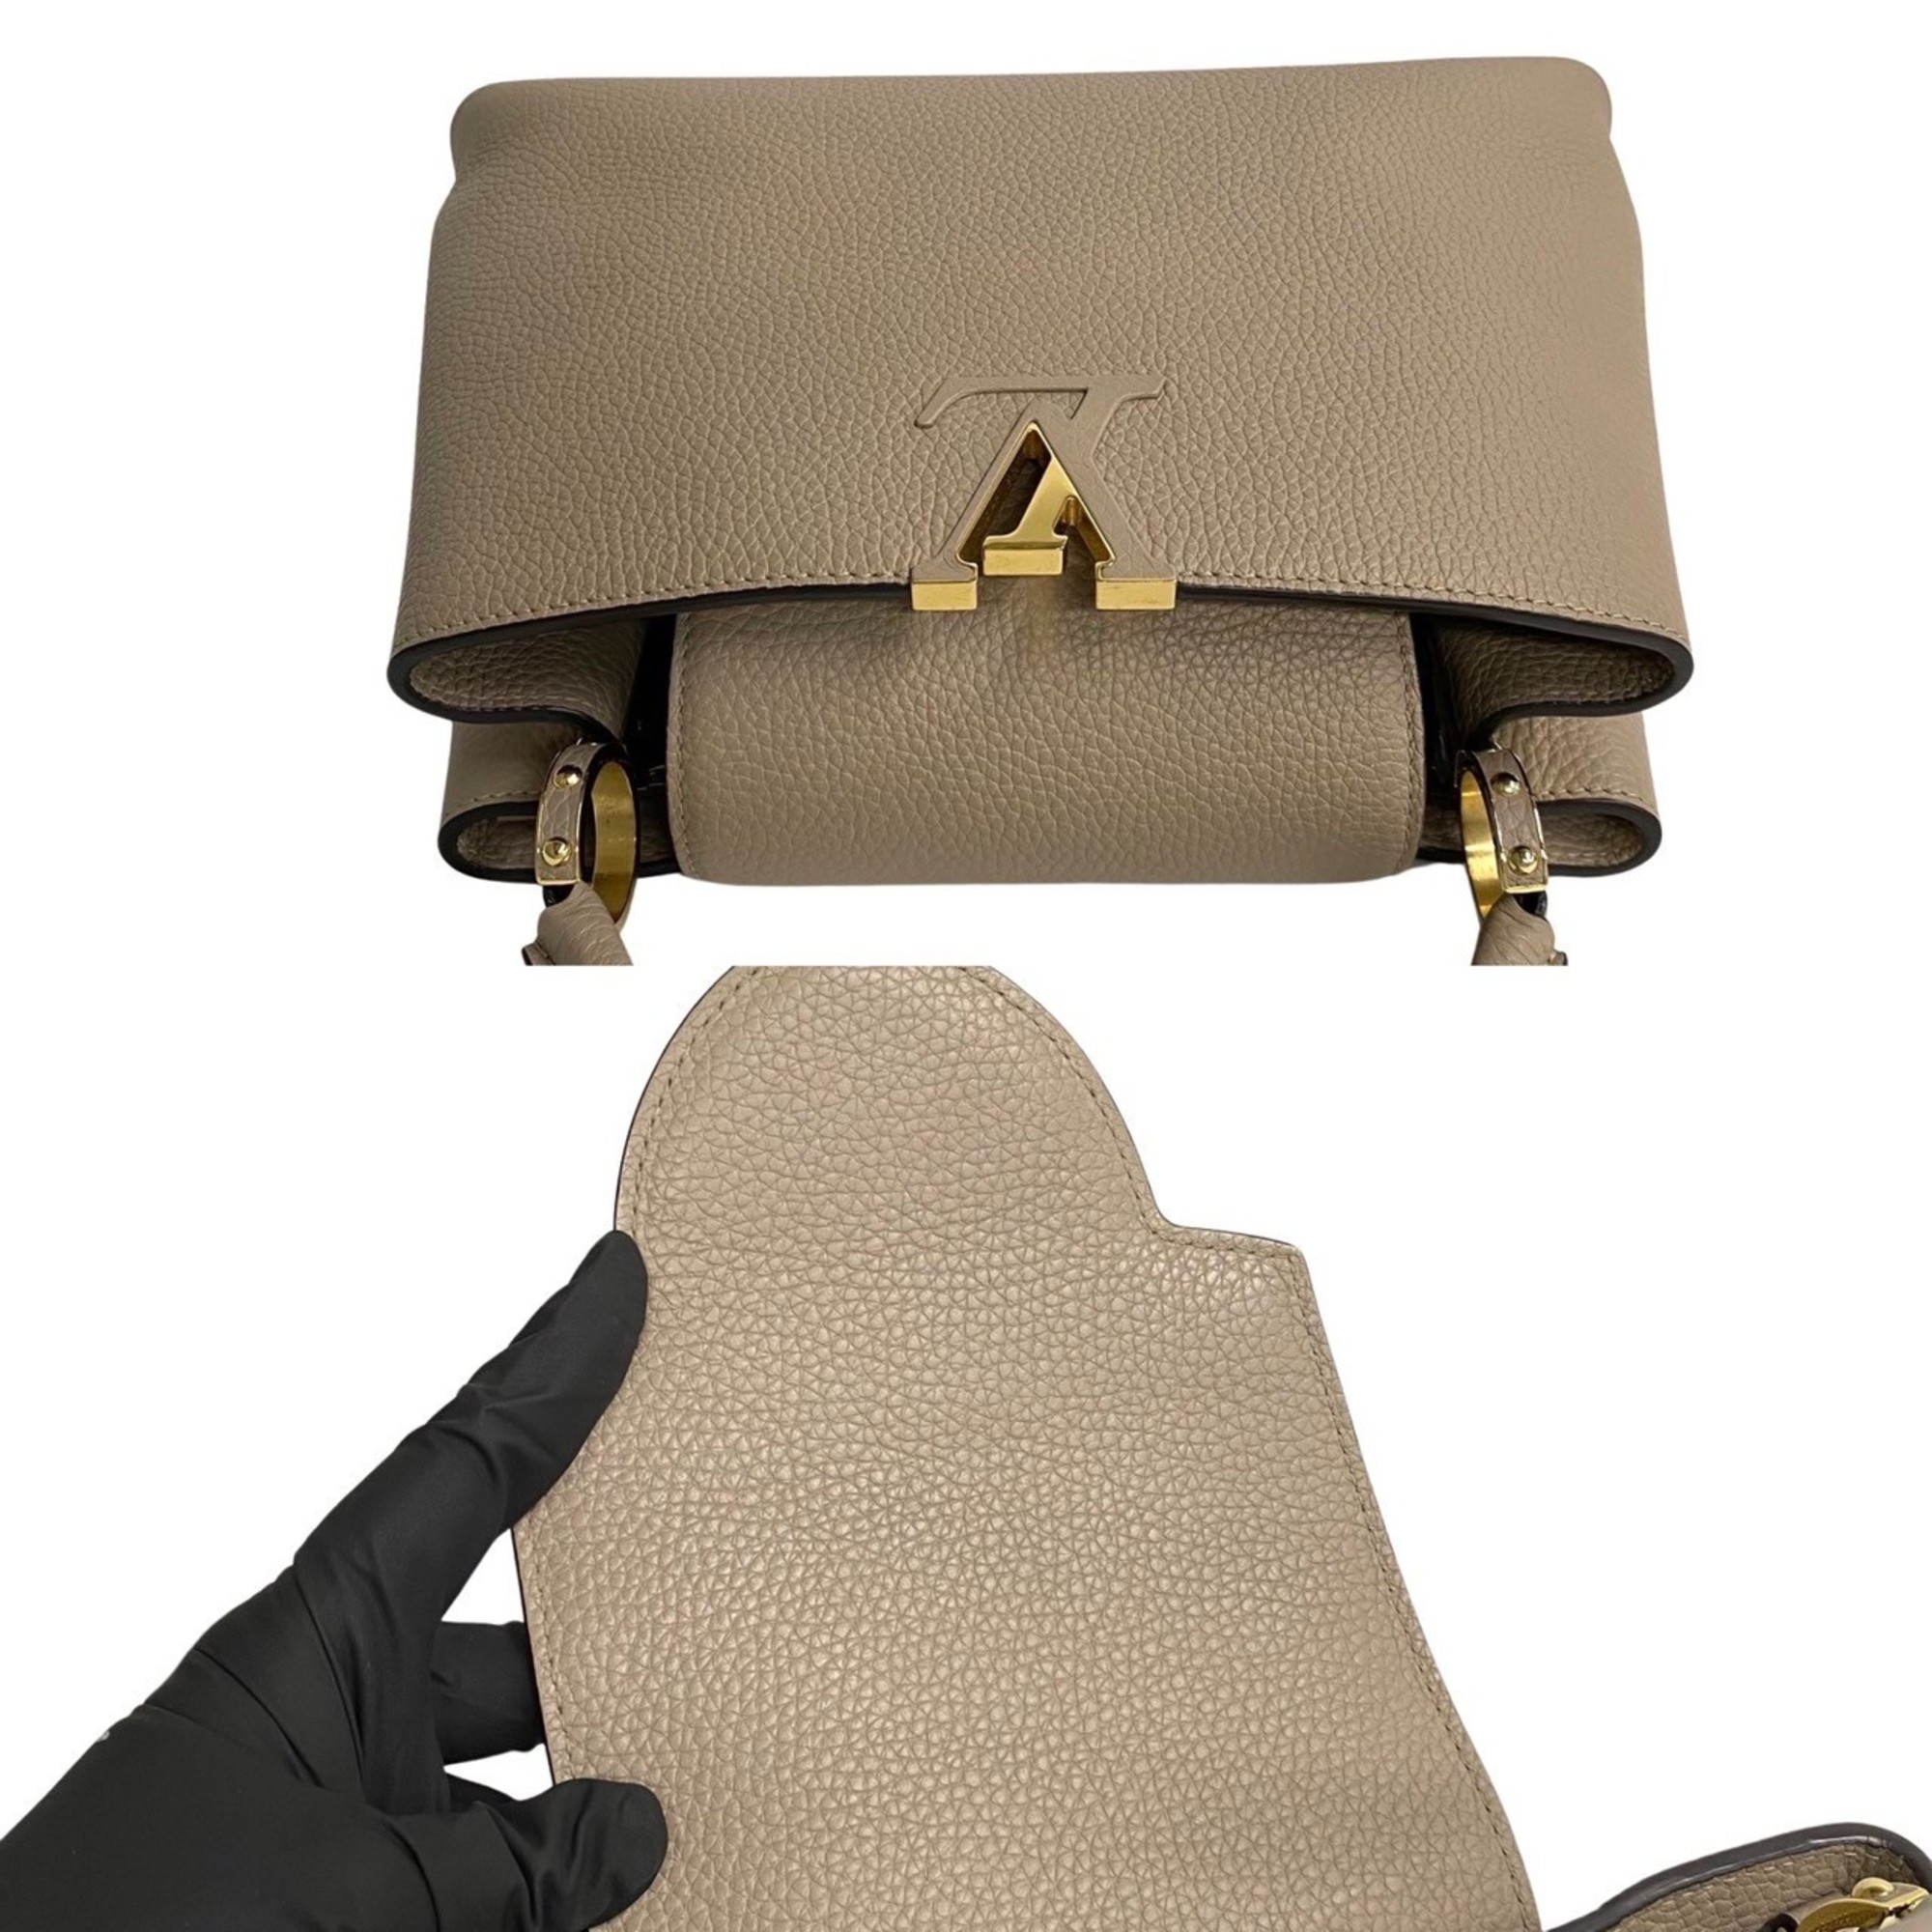 LOUIS VUITTON Capucines MM Leather 2way Handbag Shoulder Bag Beige 97802